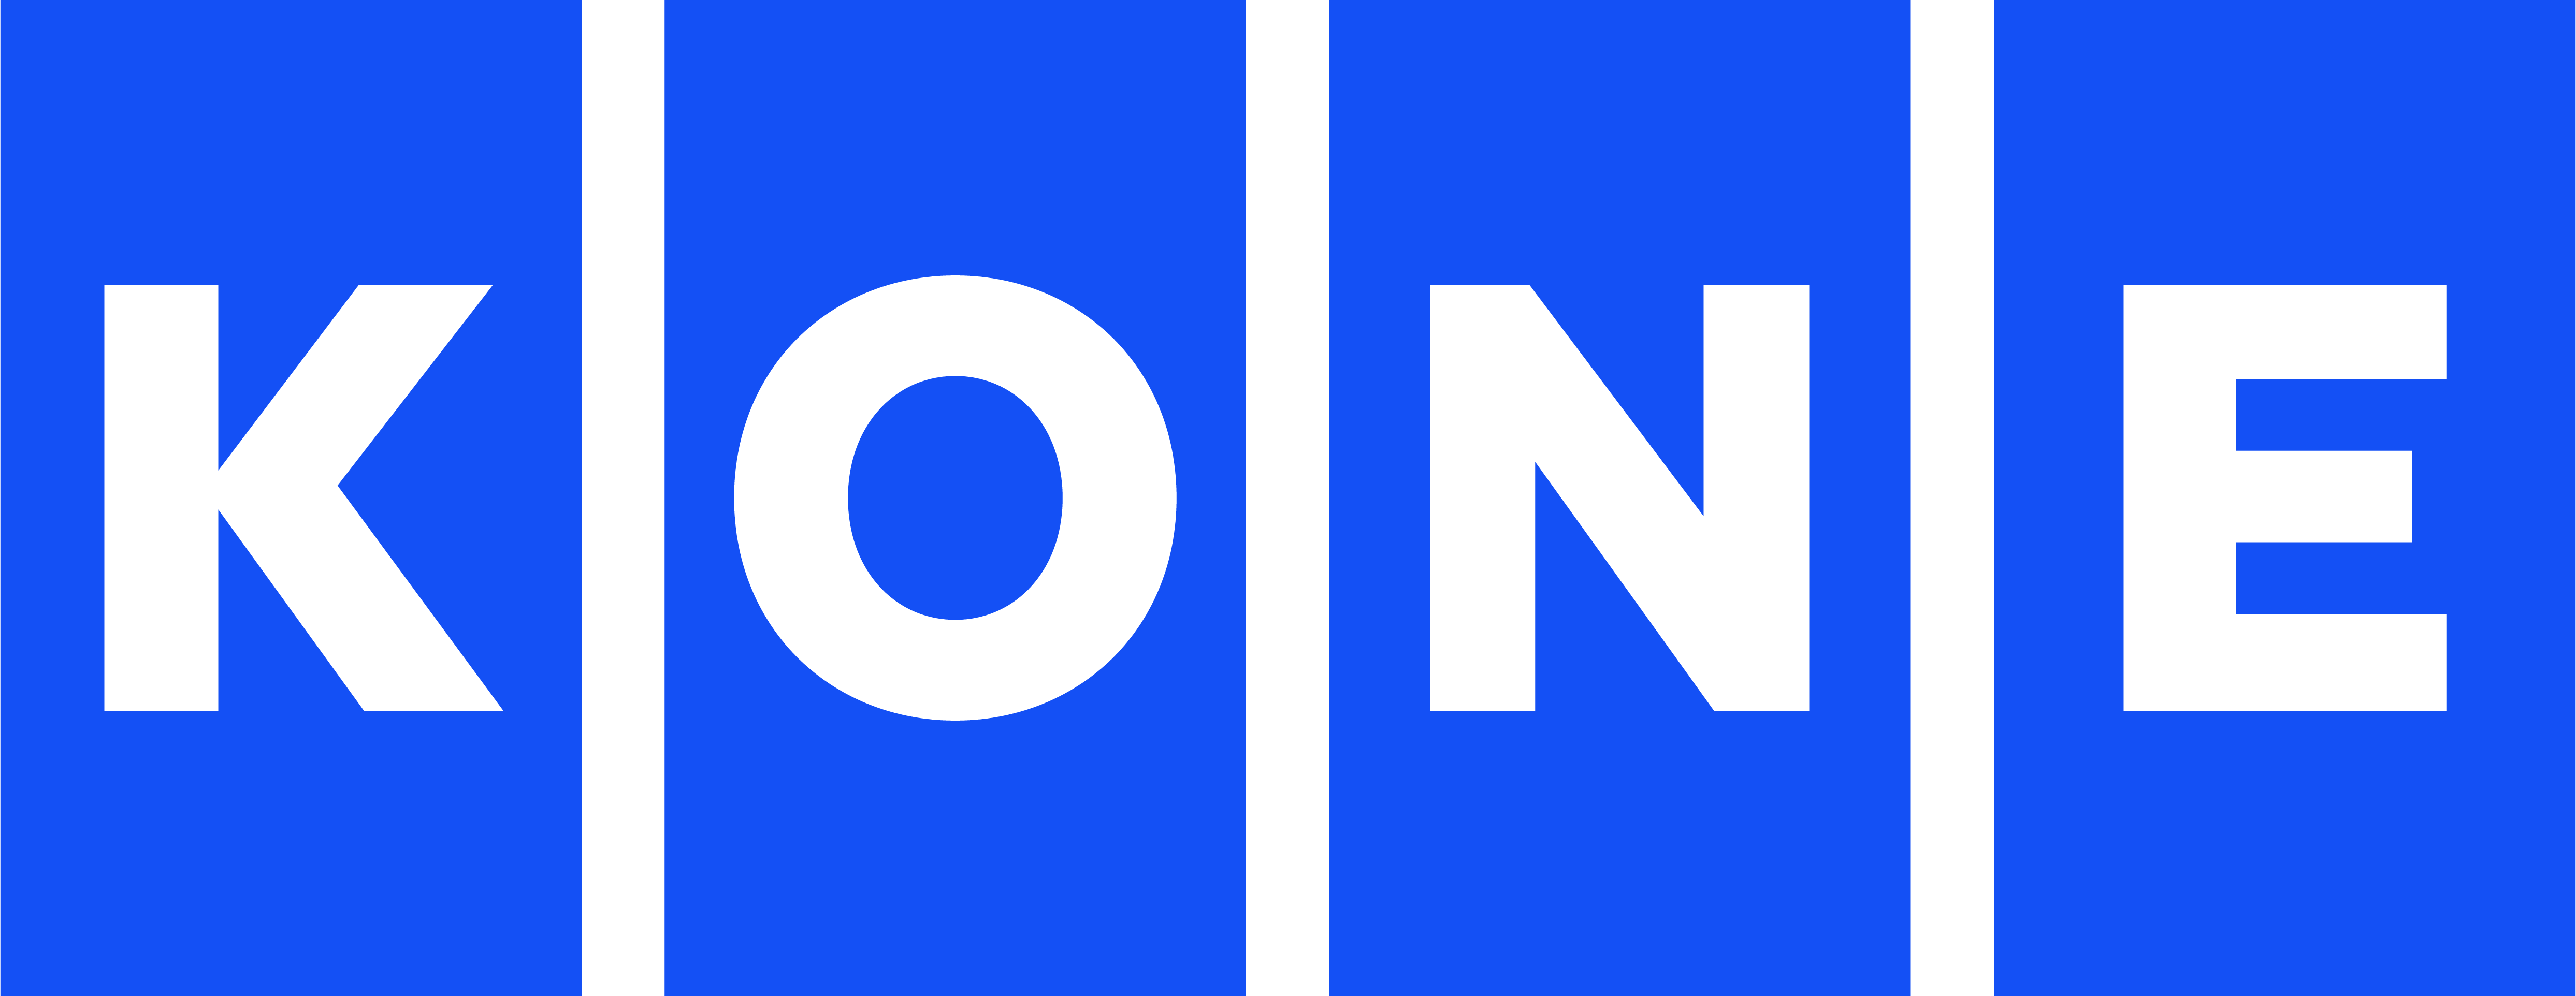 KNE KONE Corporation logo